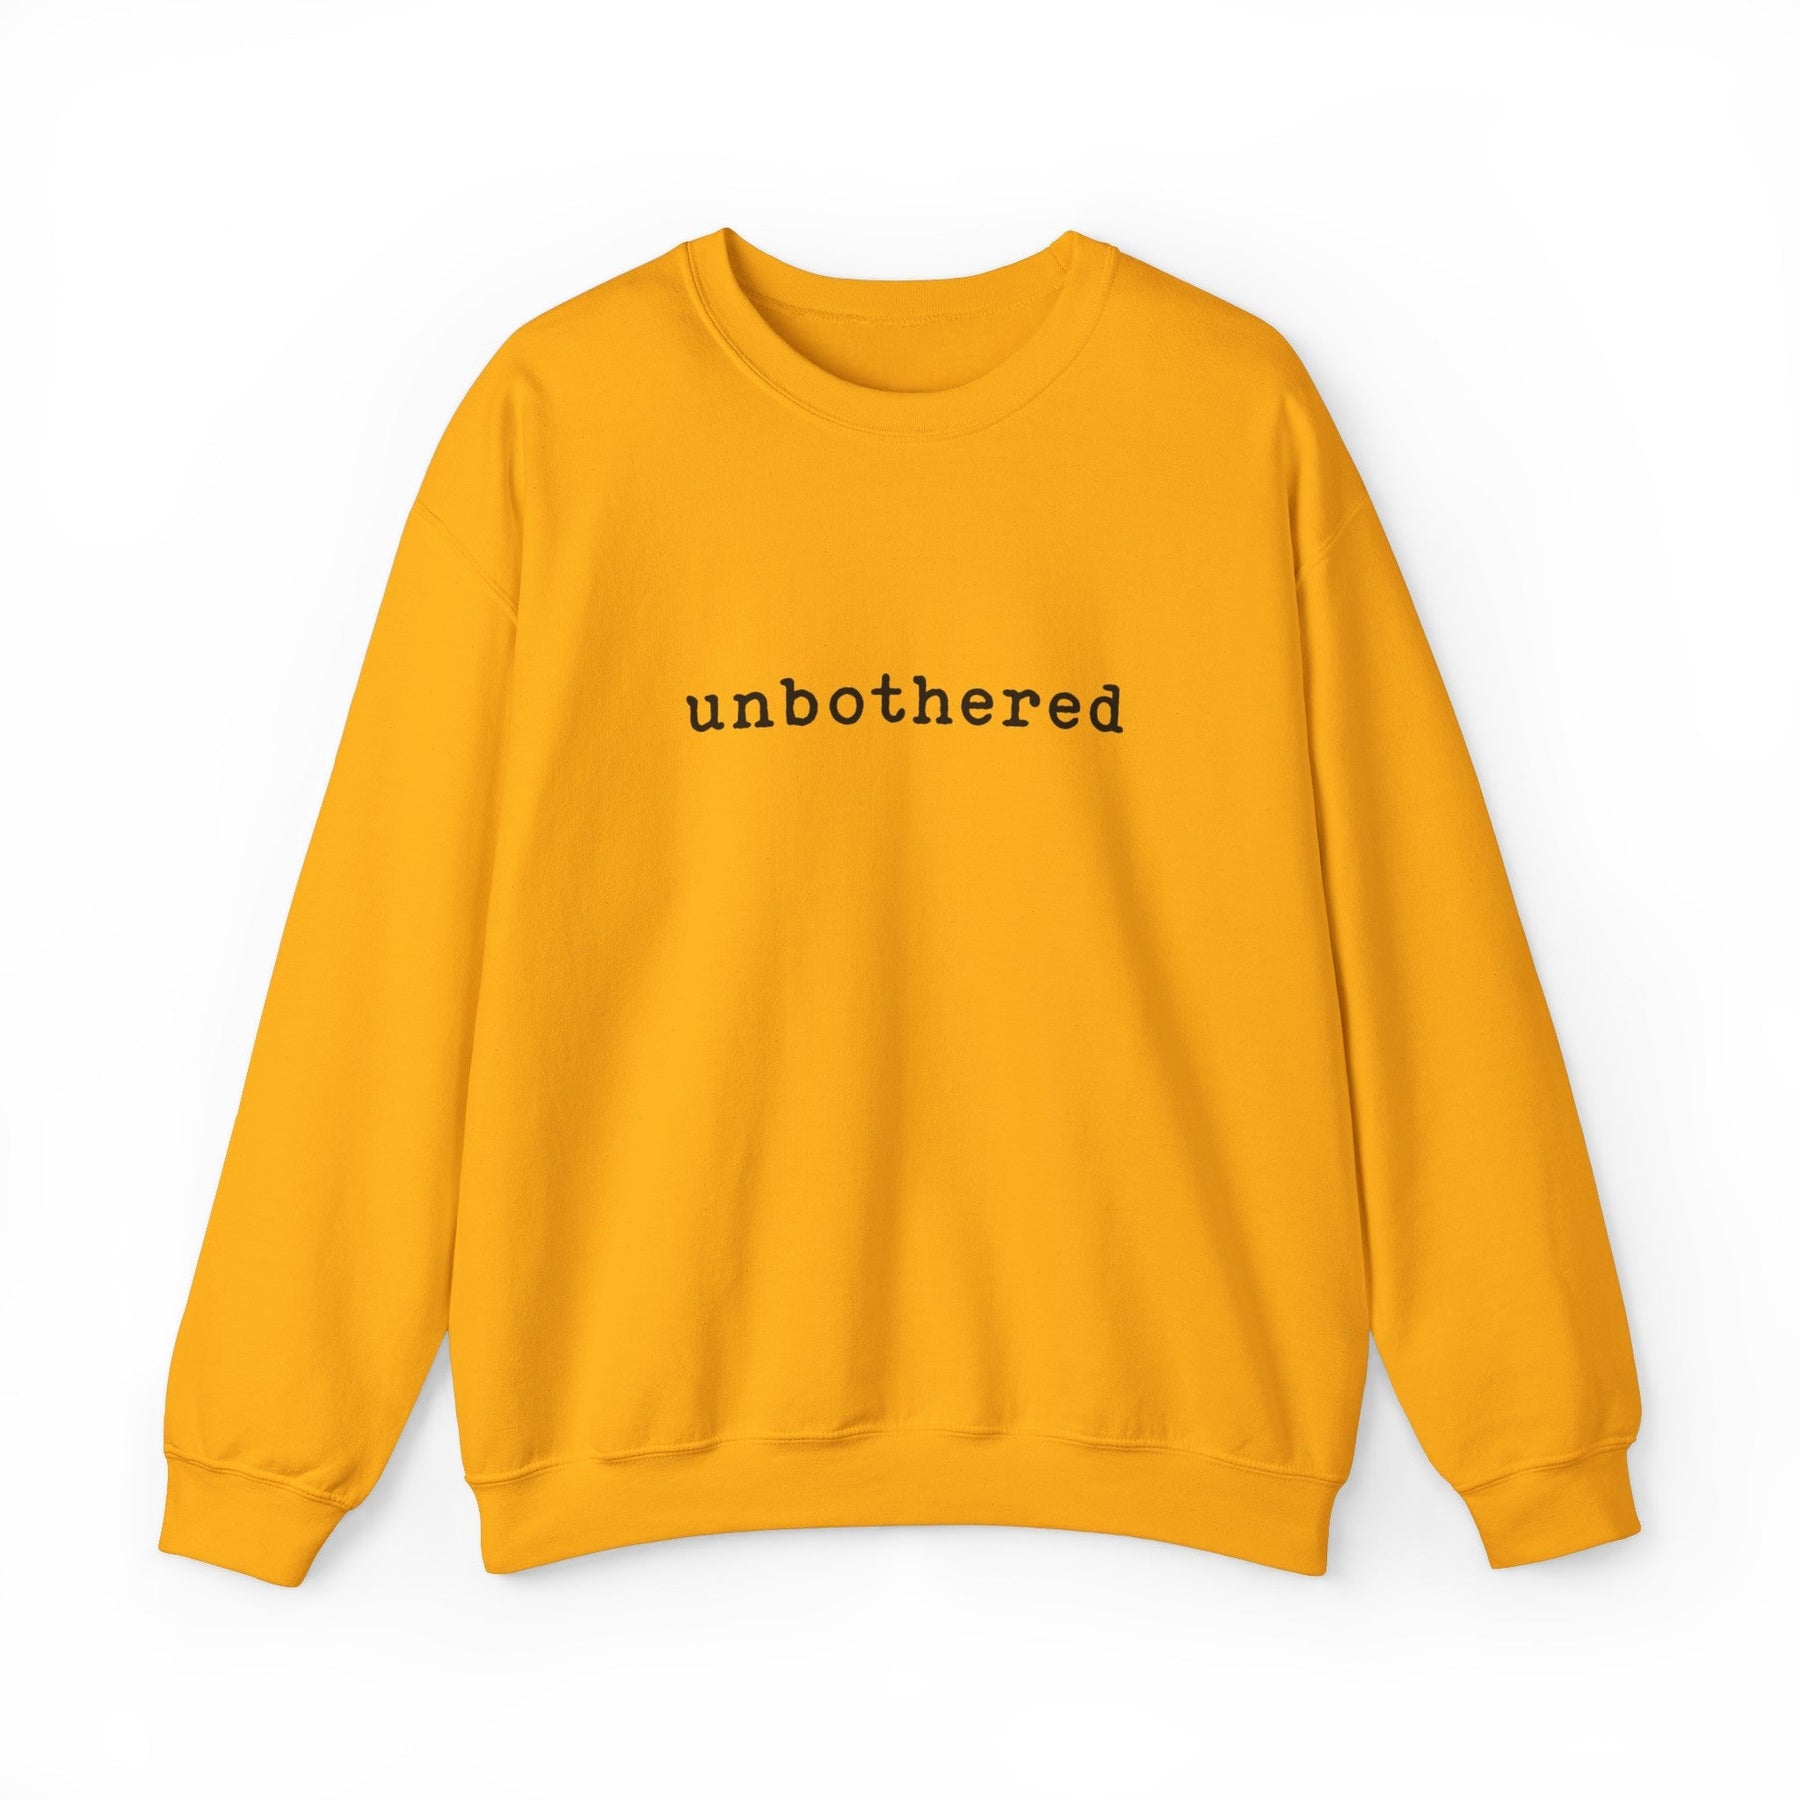 Unbothered Typewriter Long Sleeve Crew Neck Sweatshirt - Goth Cloth Co.Sweatshirt29683052074701768579